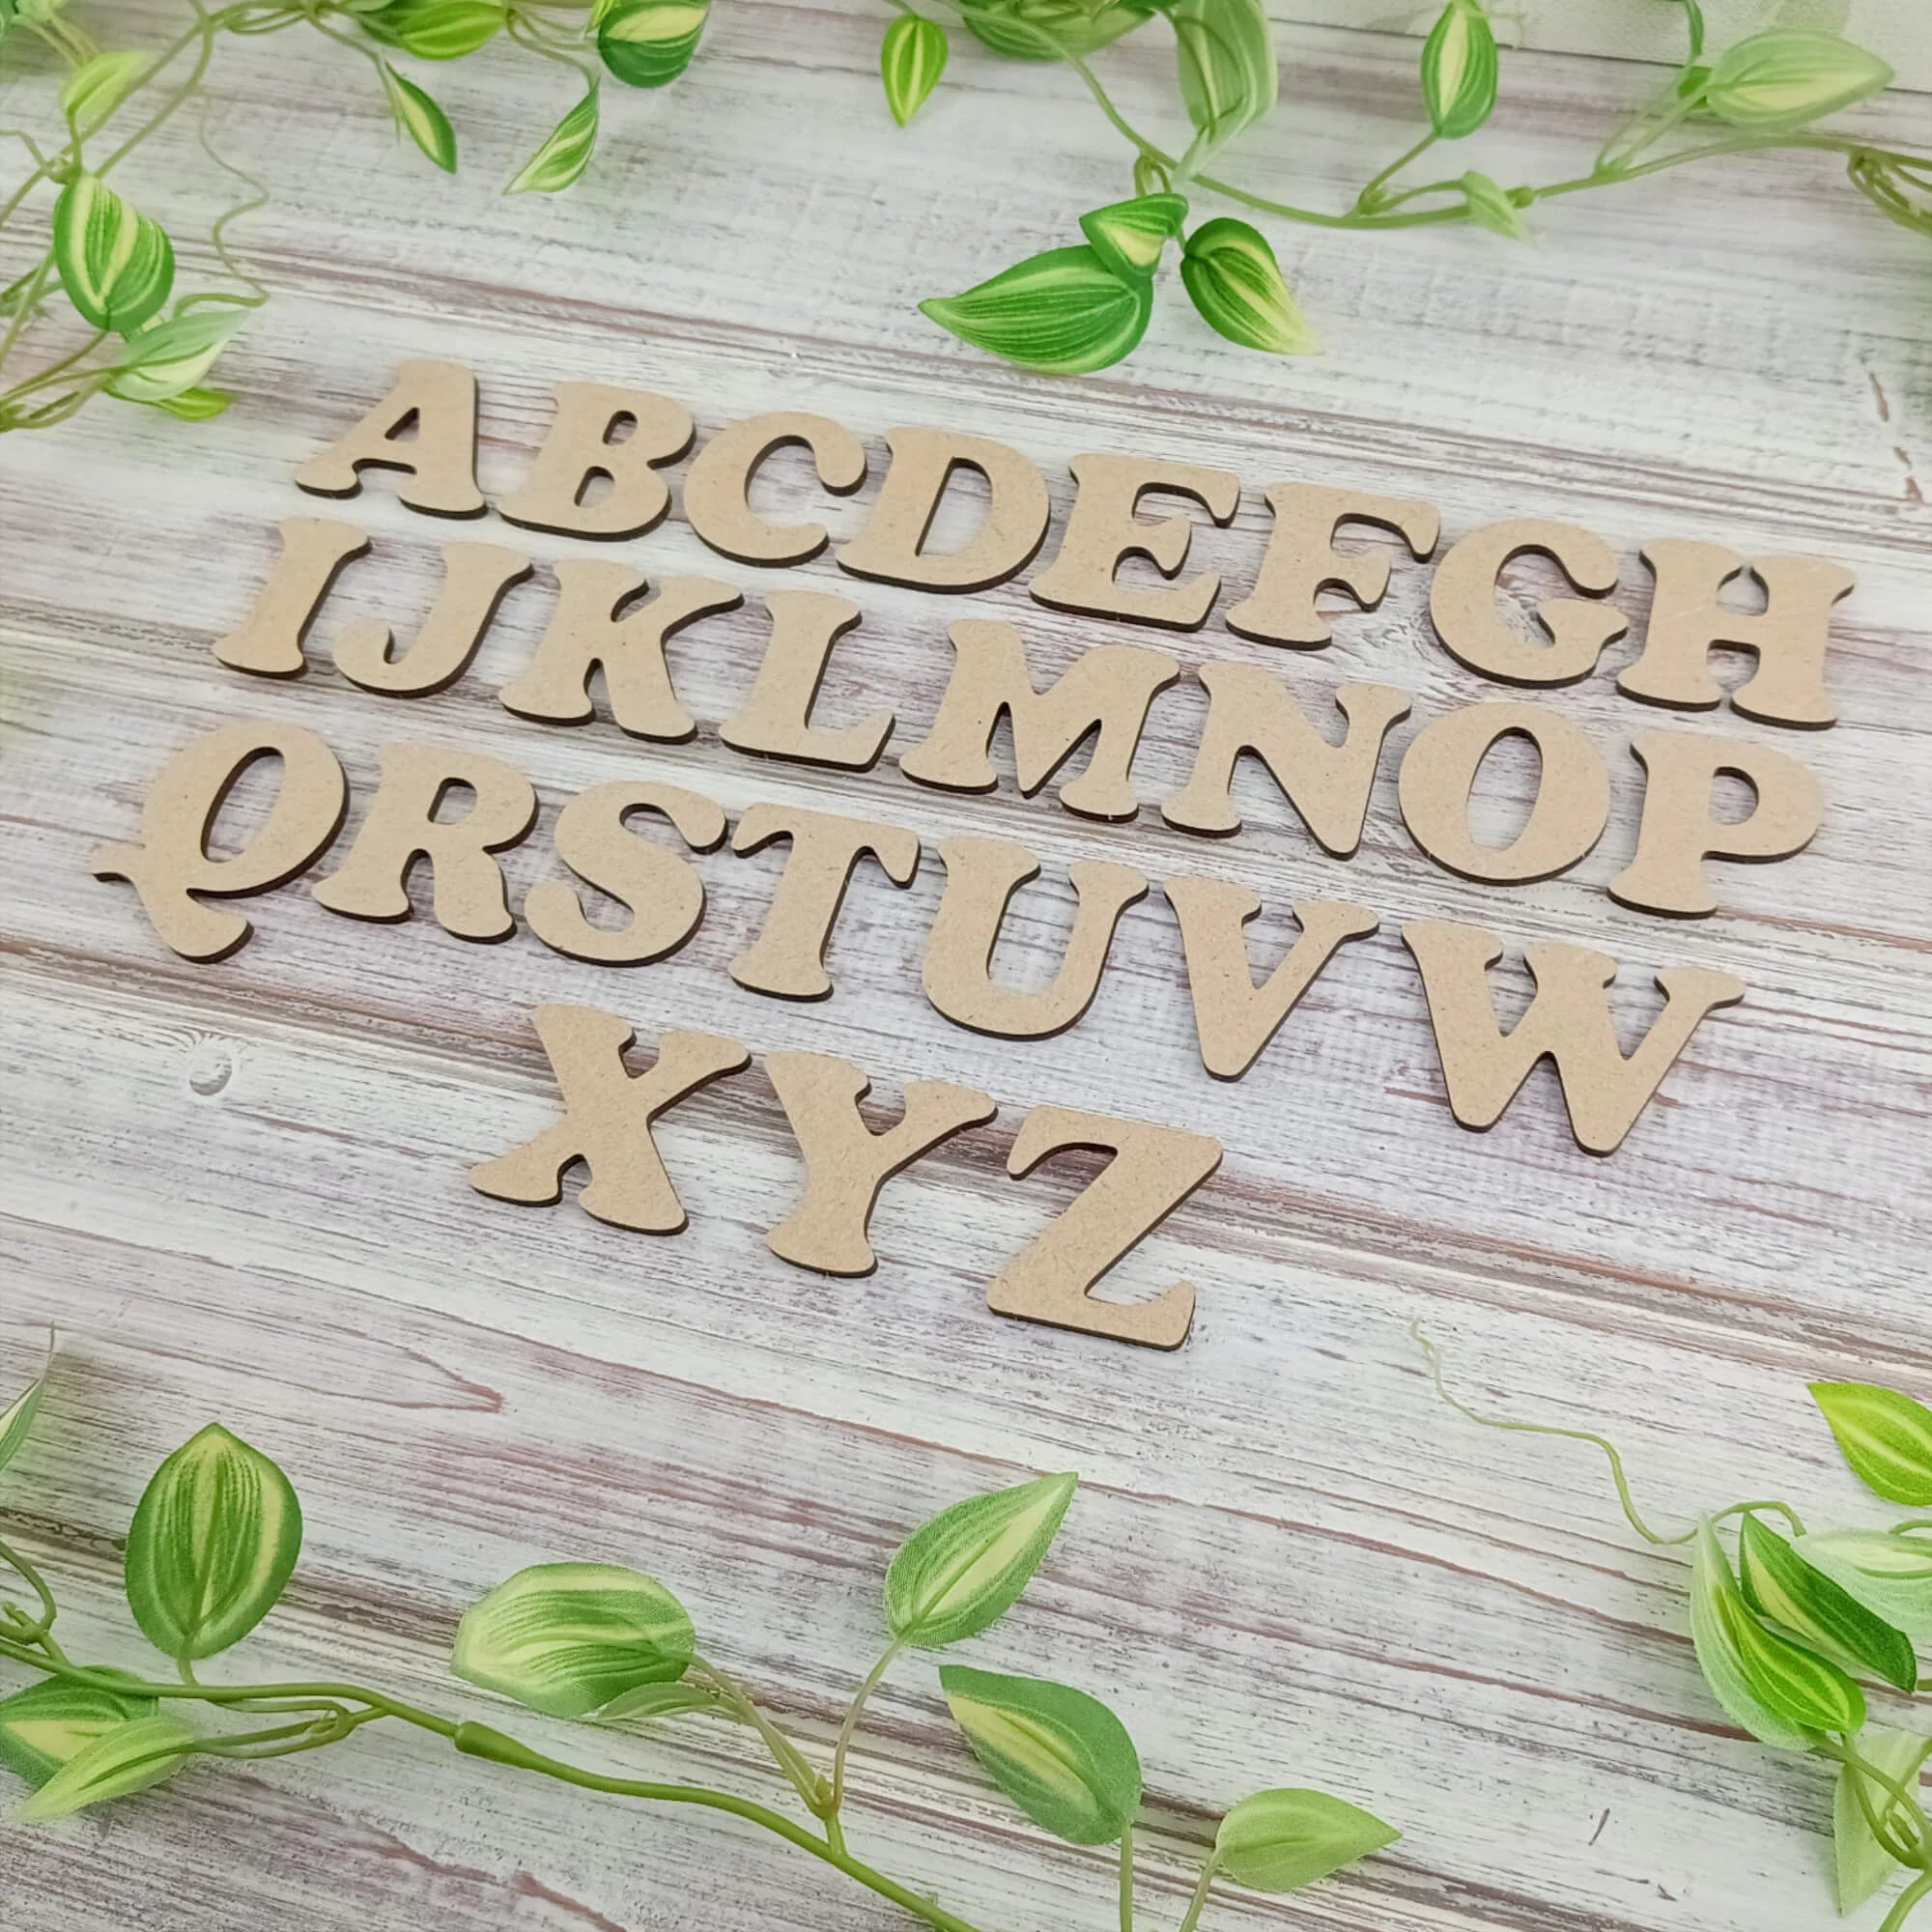 Wooden letter craft shapes